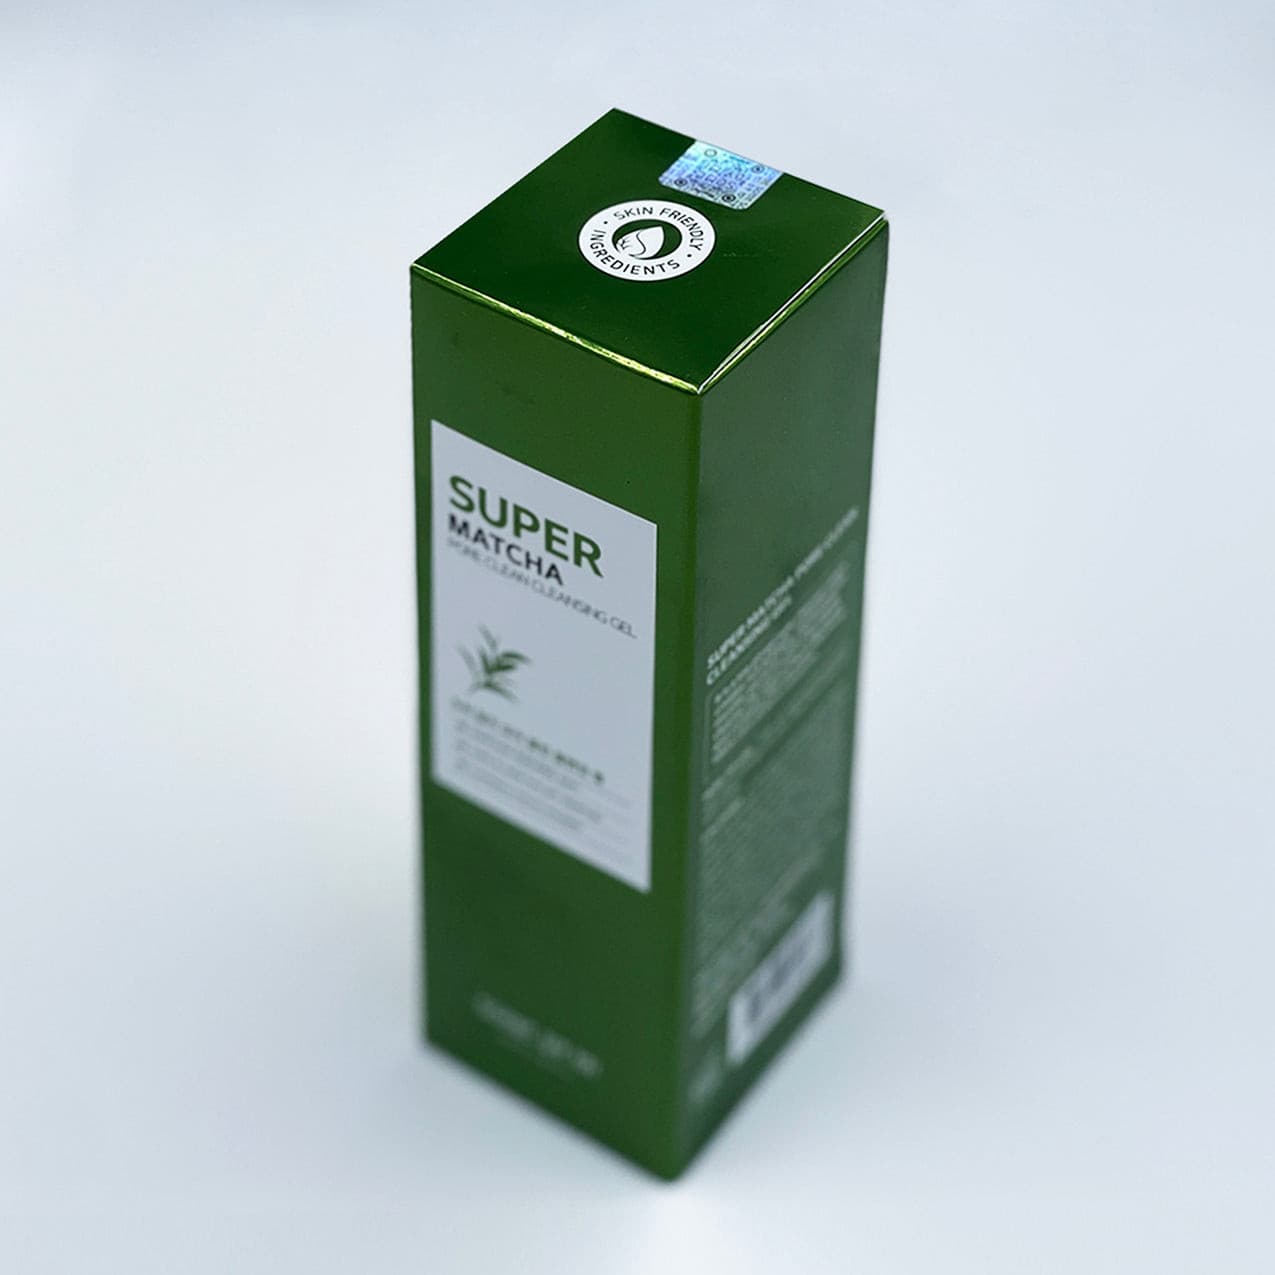 Super Matcha Pore Clean Cleansing Gel | Gel limpiador de poros 100ml - Koelleza Store